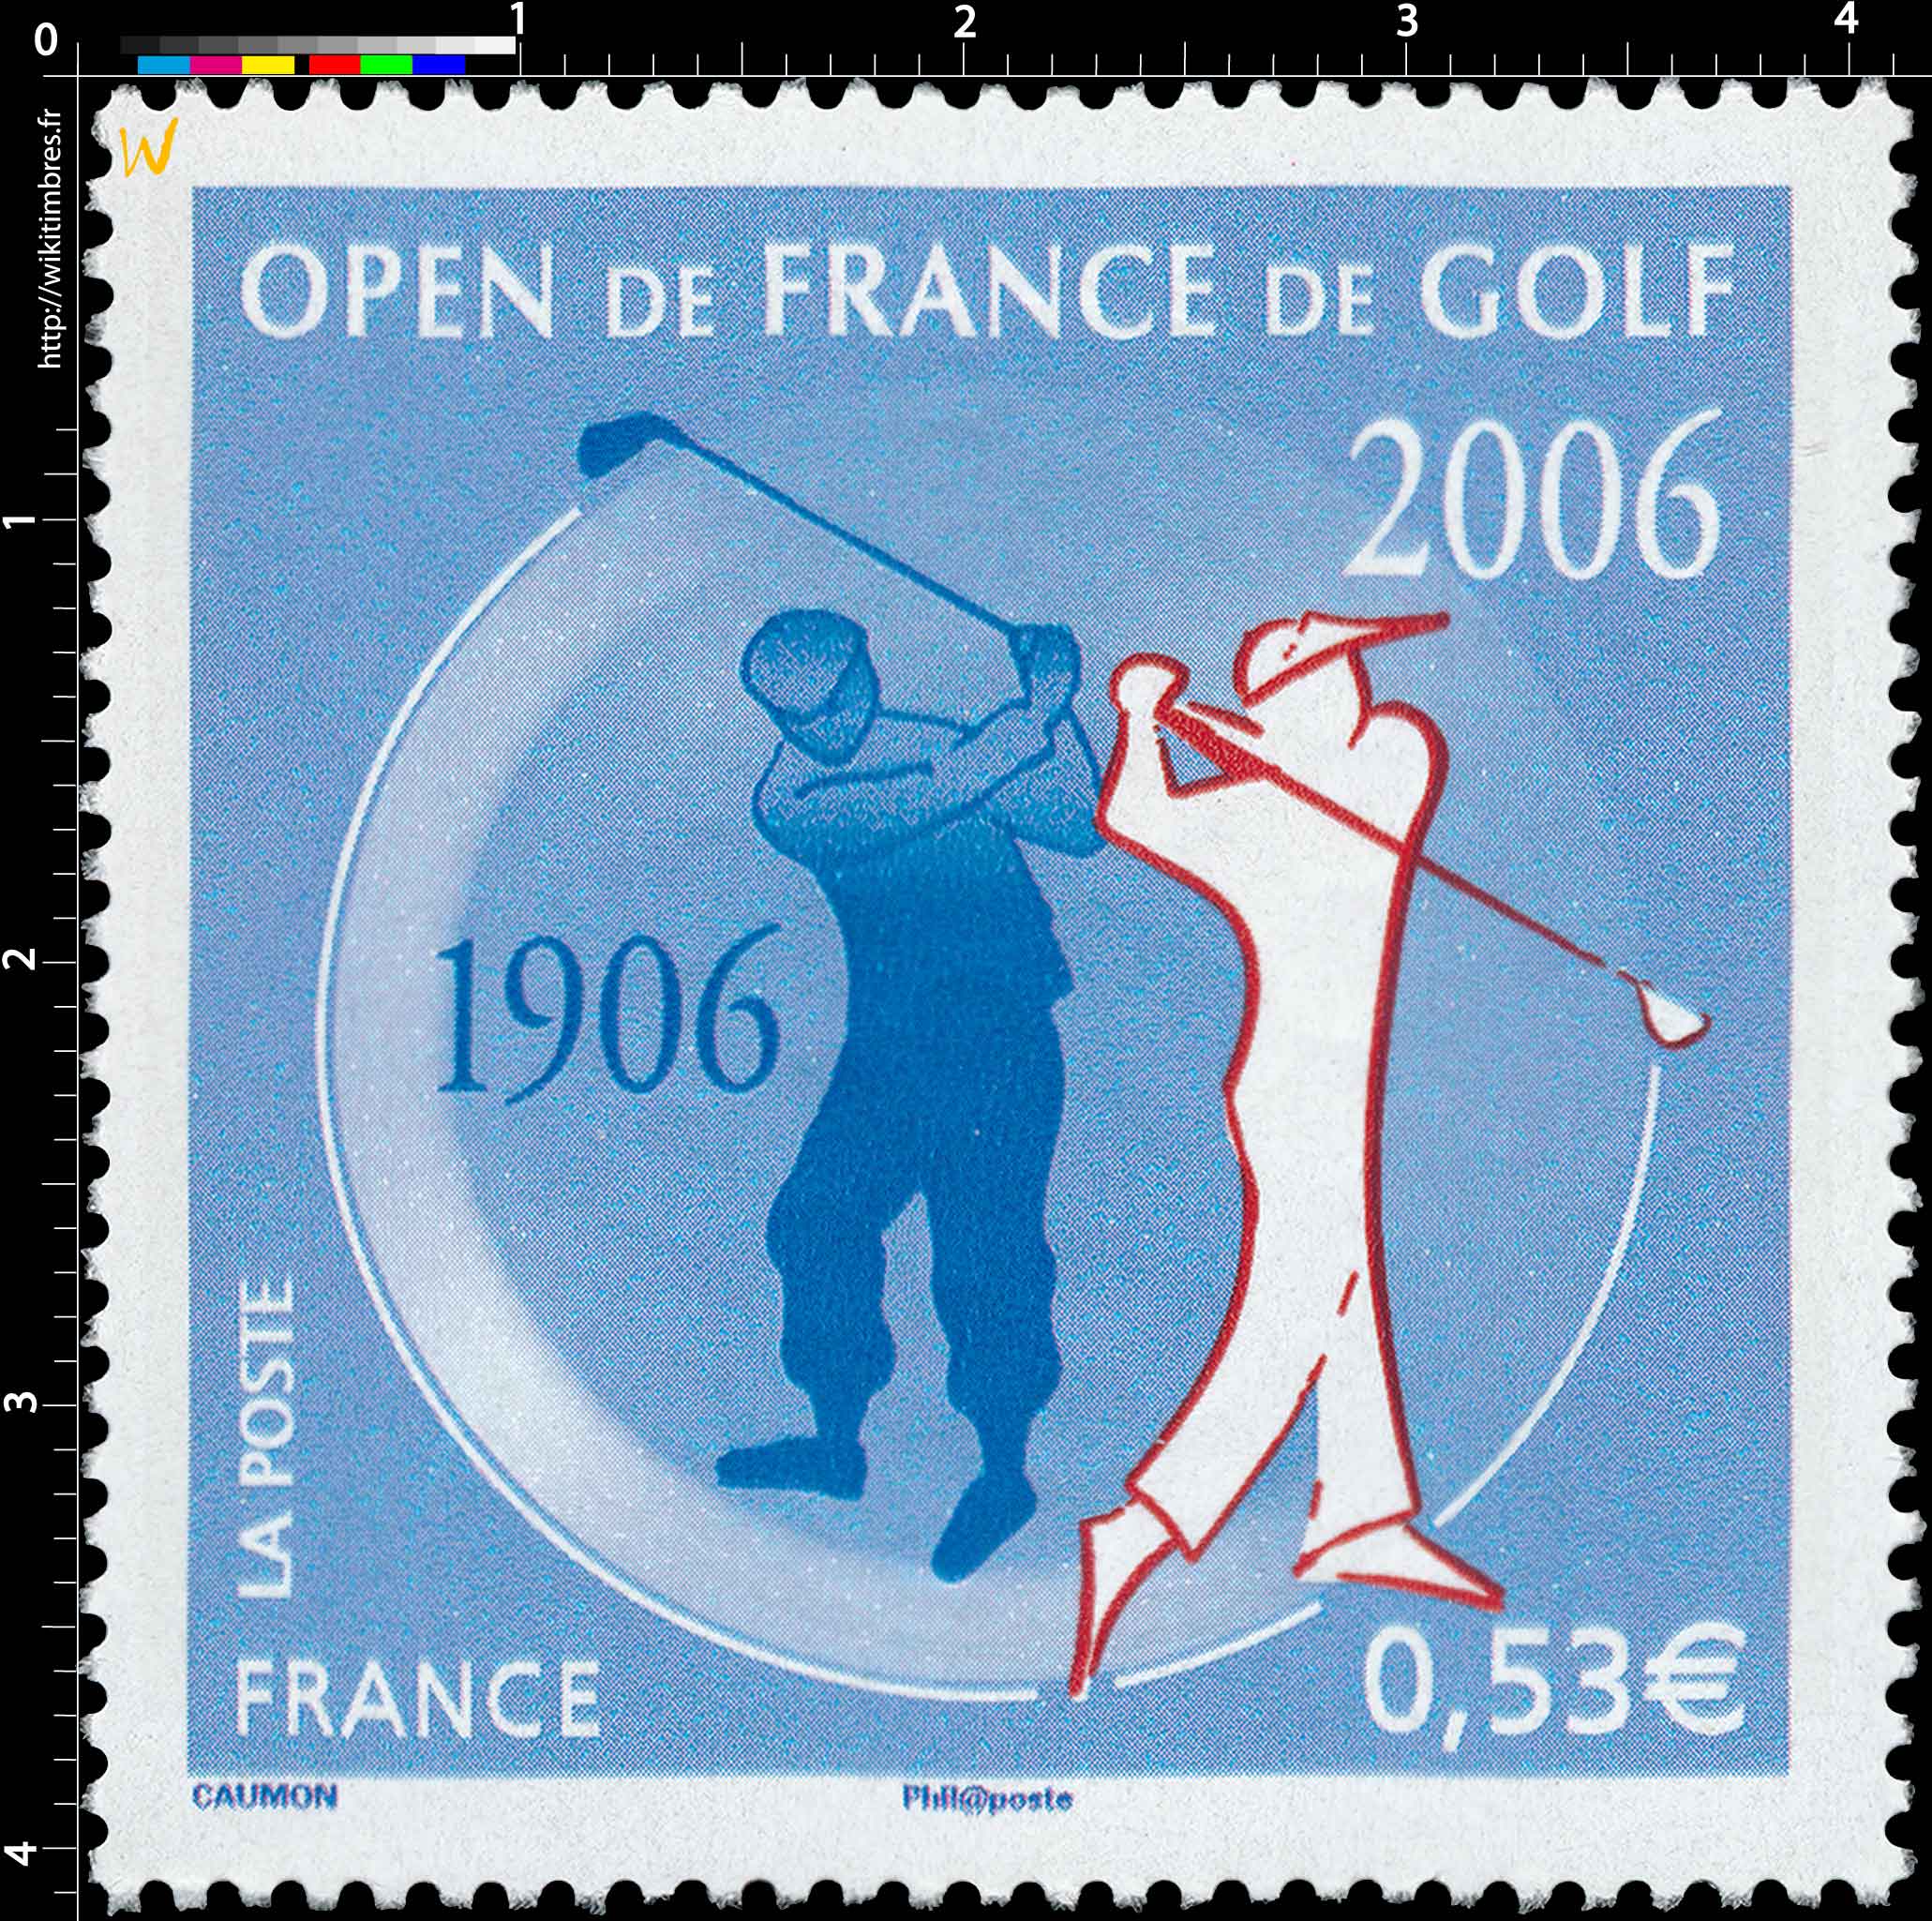 OPEN DE FRANCE DE GOLF 1906-2006